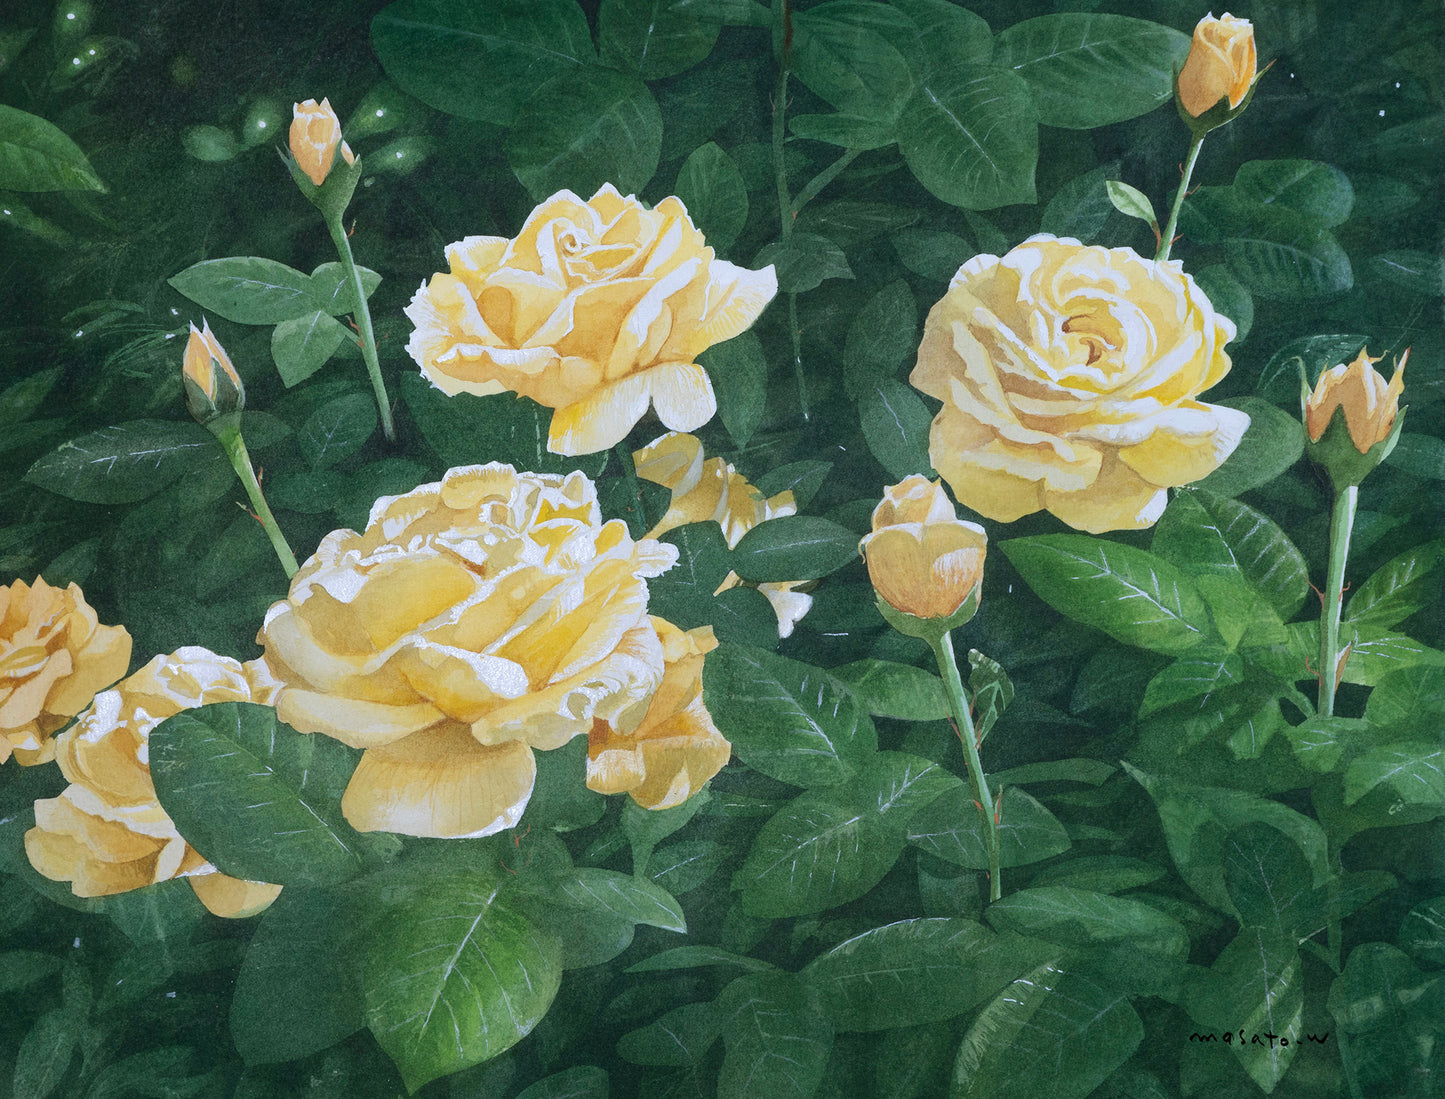 c- Pale yellow rose